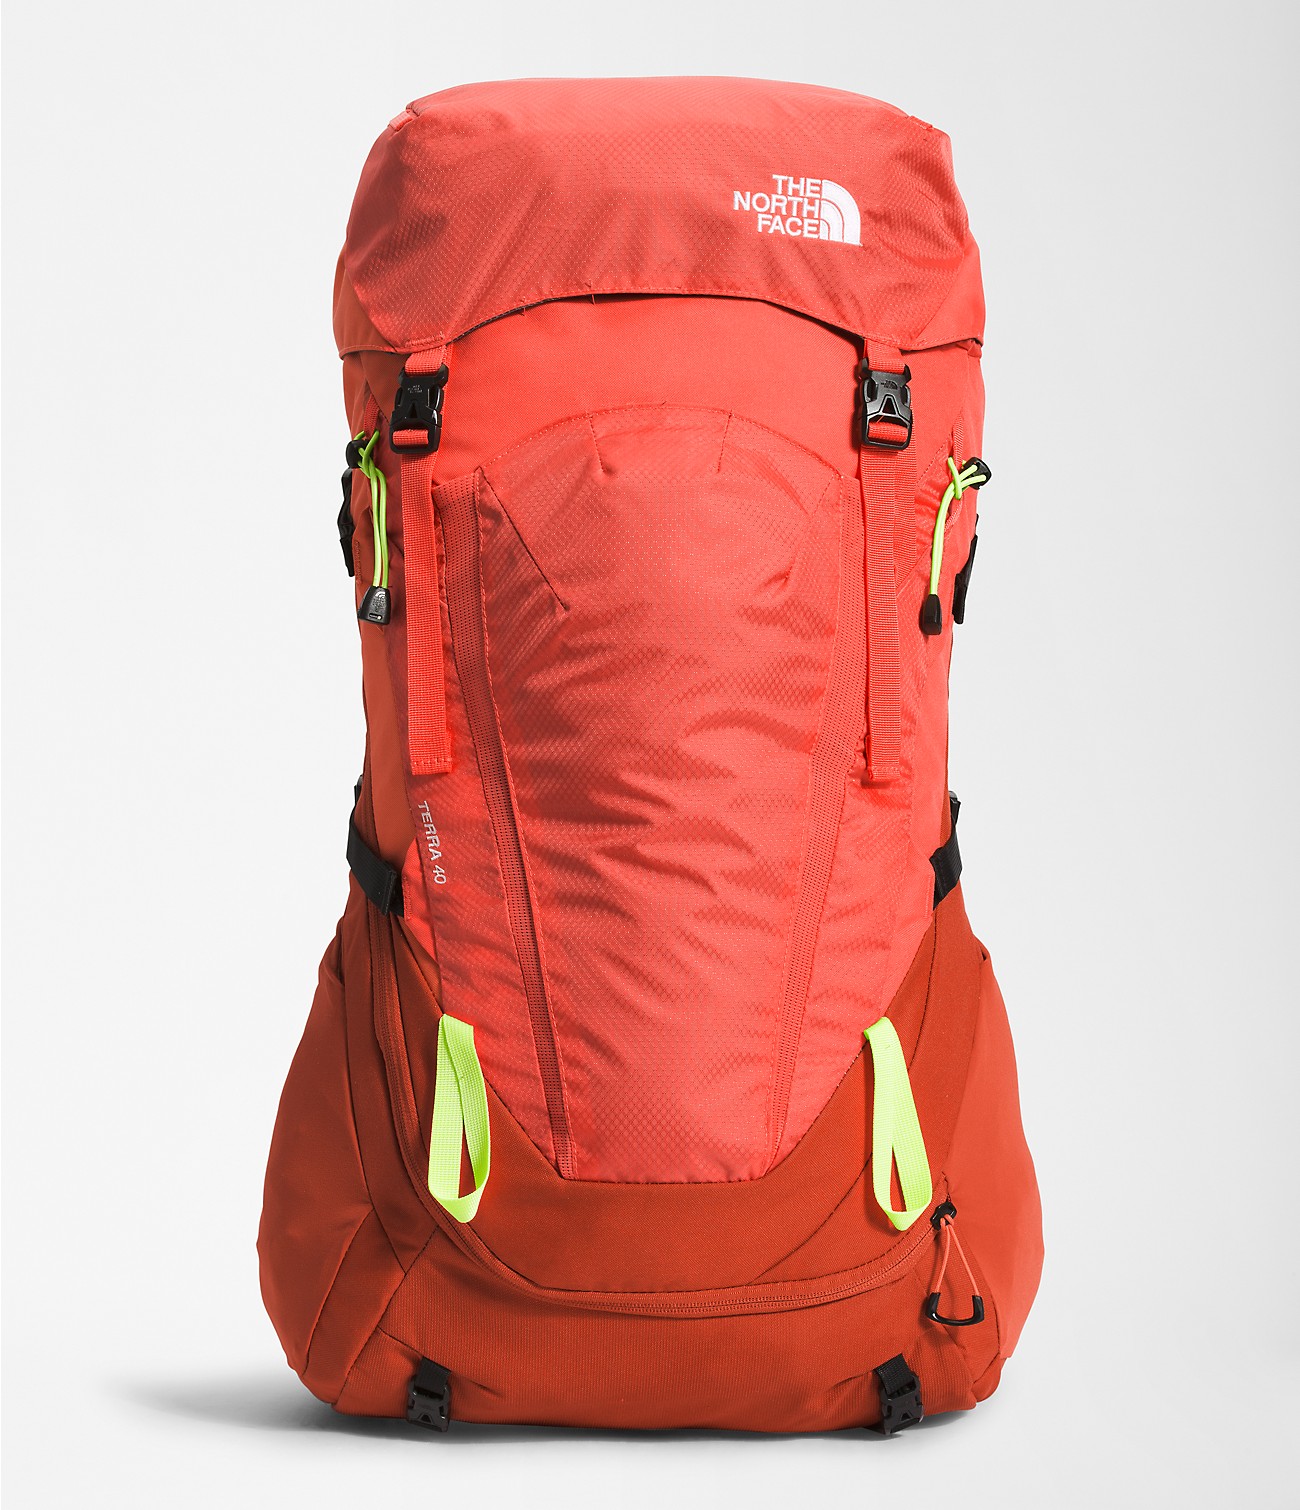 Best Selling Backpacks Daypacks | The Face